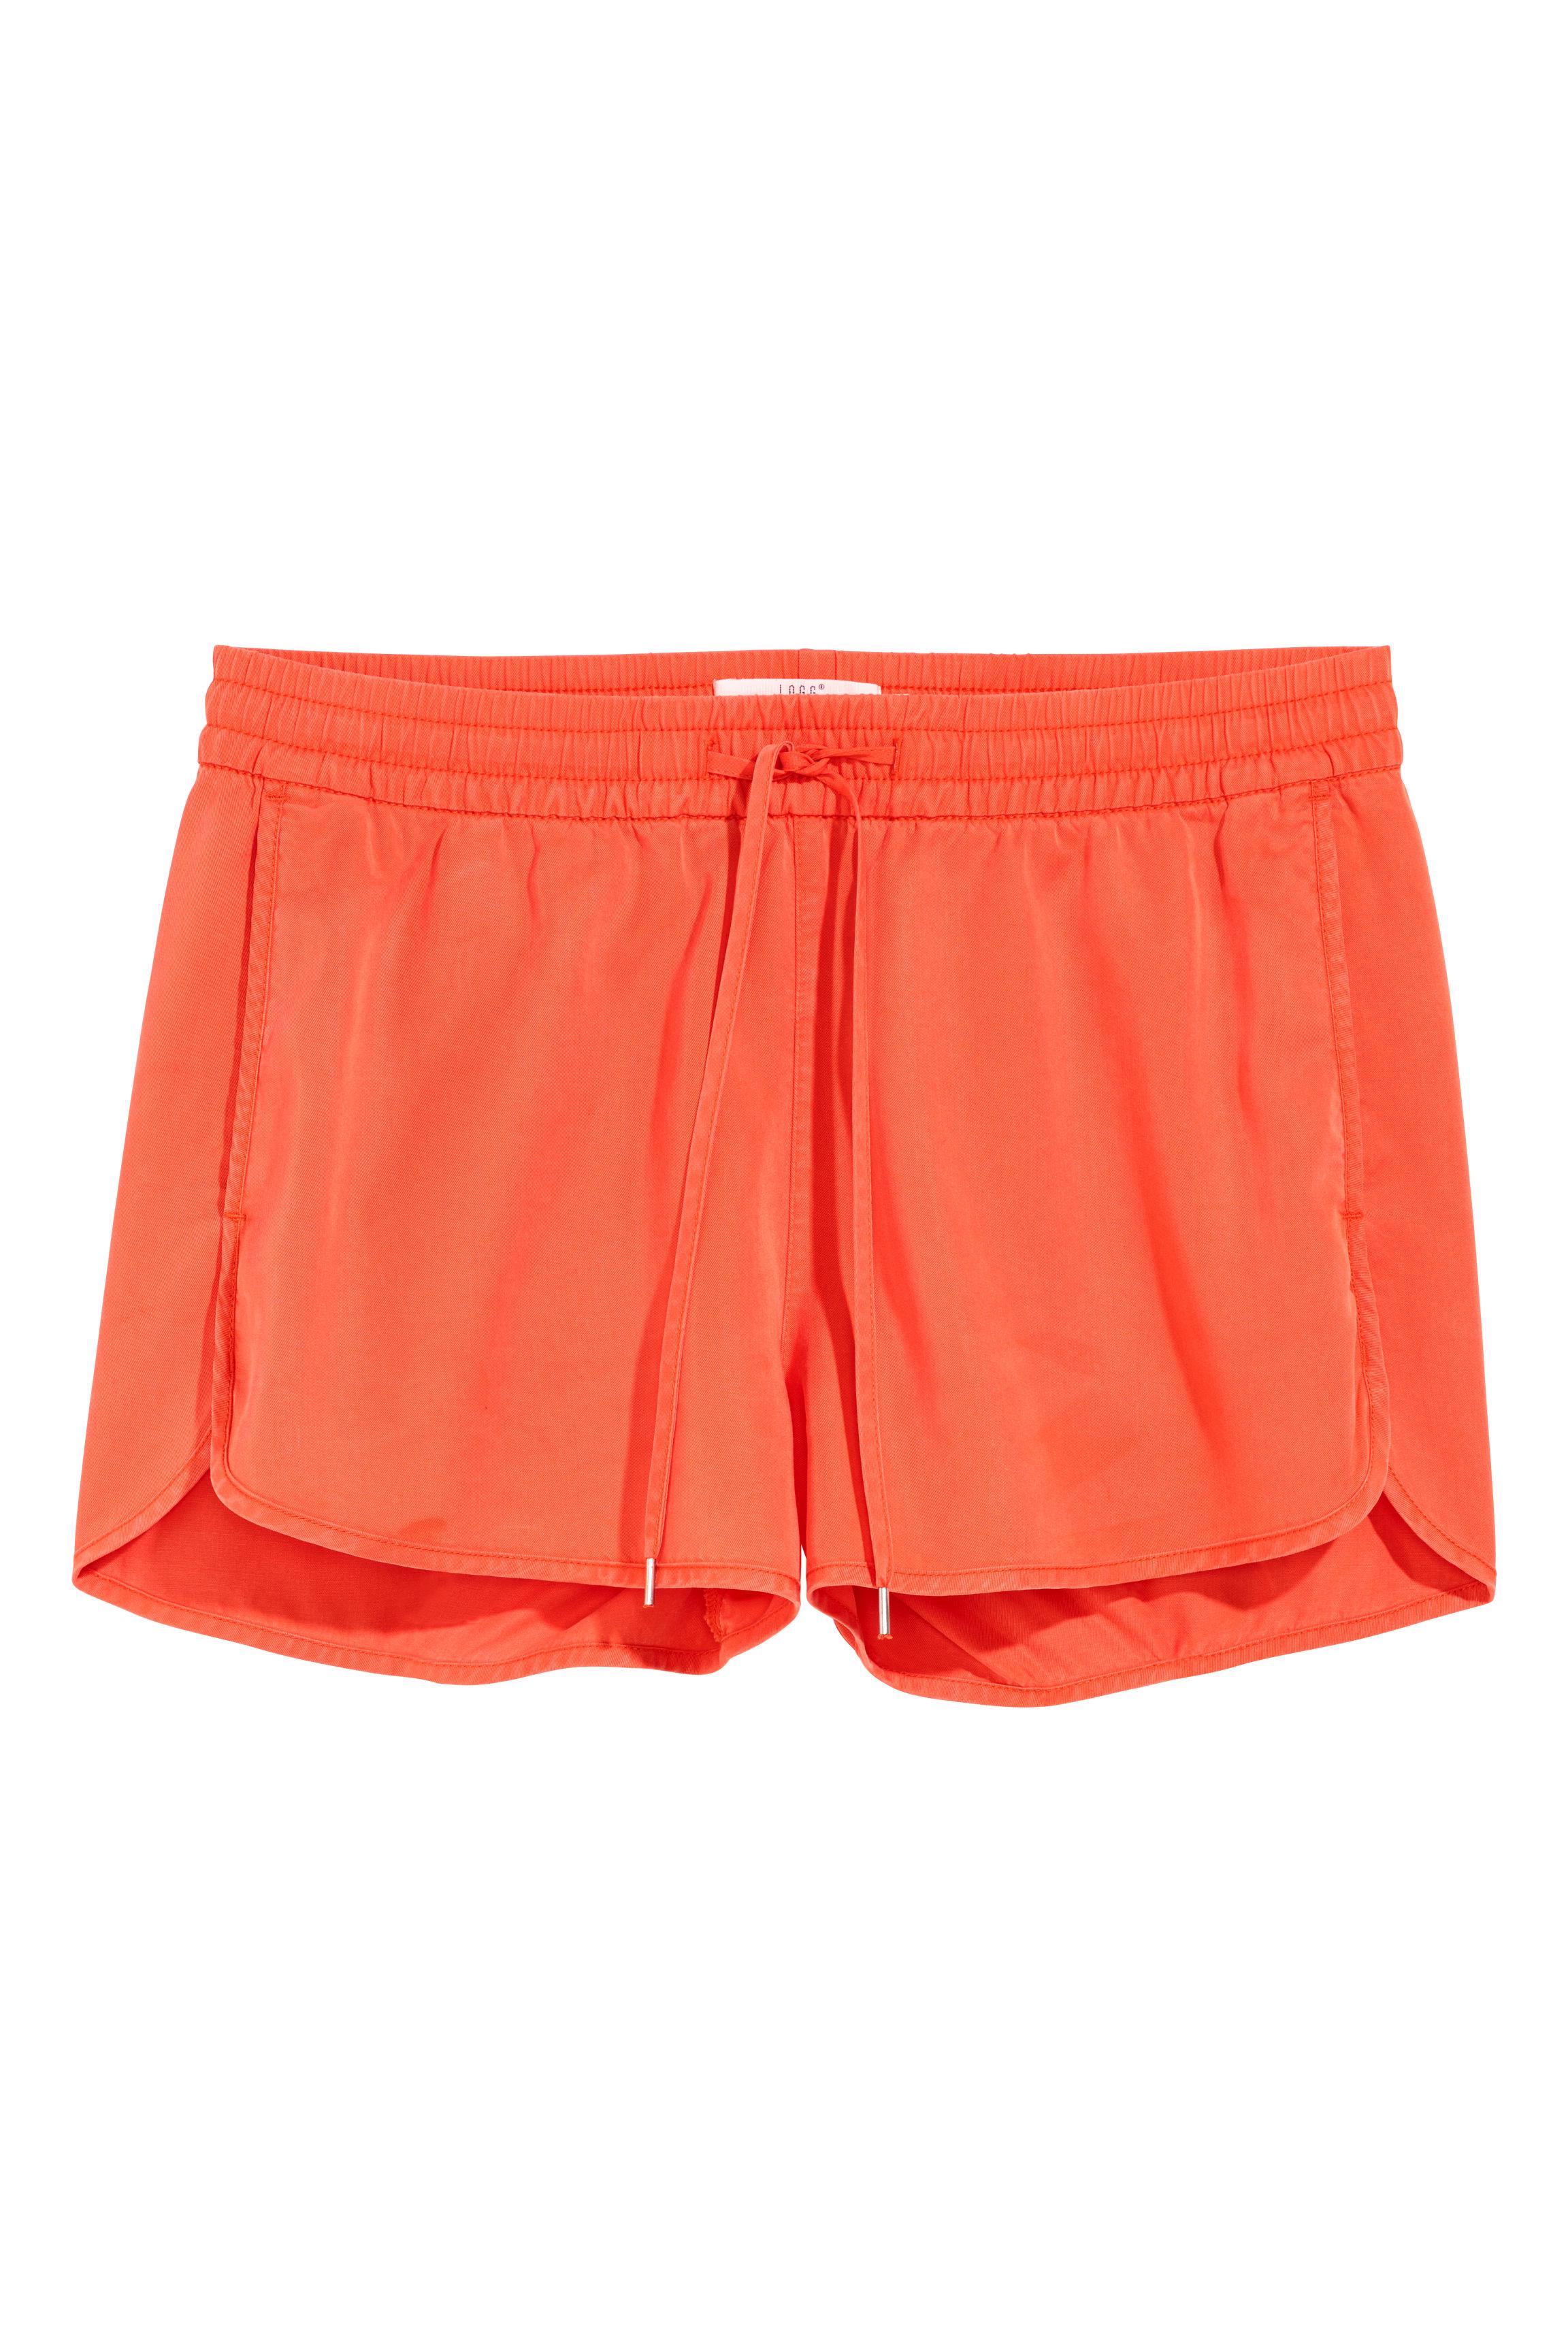 H&M Lyocell Shorts in Orange - Lyst